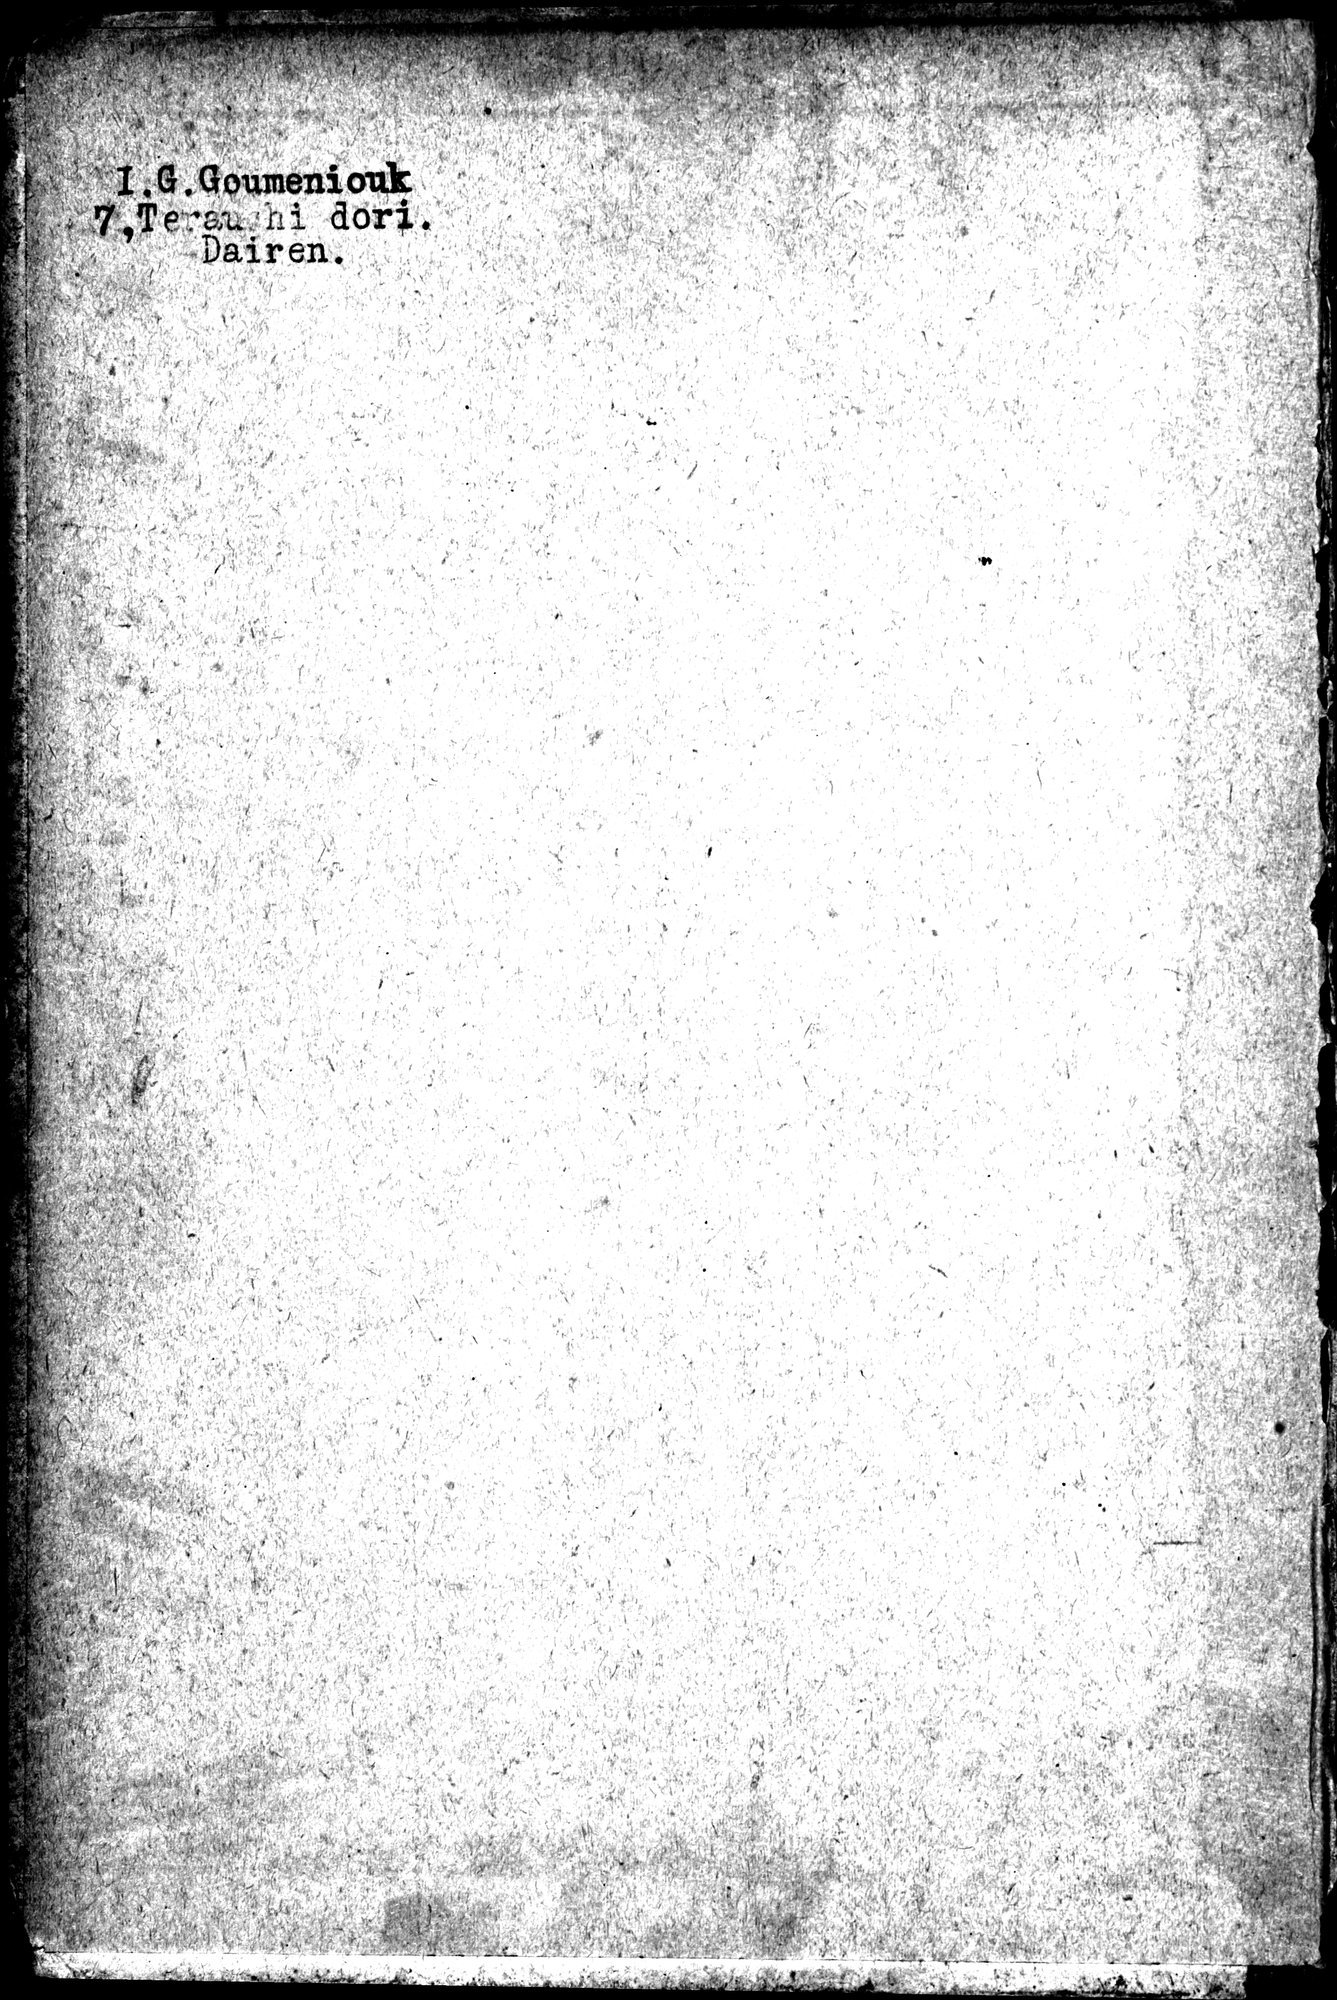 Mongoliya i Amdo i mertby gorod Khara-Khoto : vol.1 / Page 2 (Grayscale High Resolution Image)